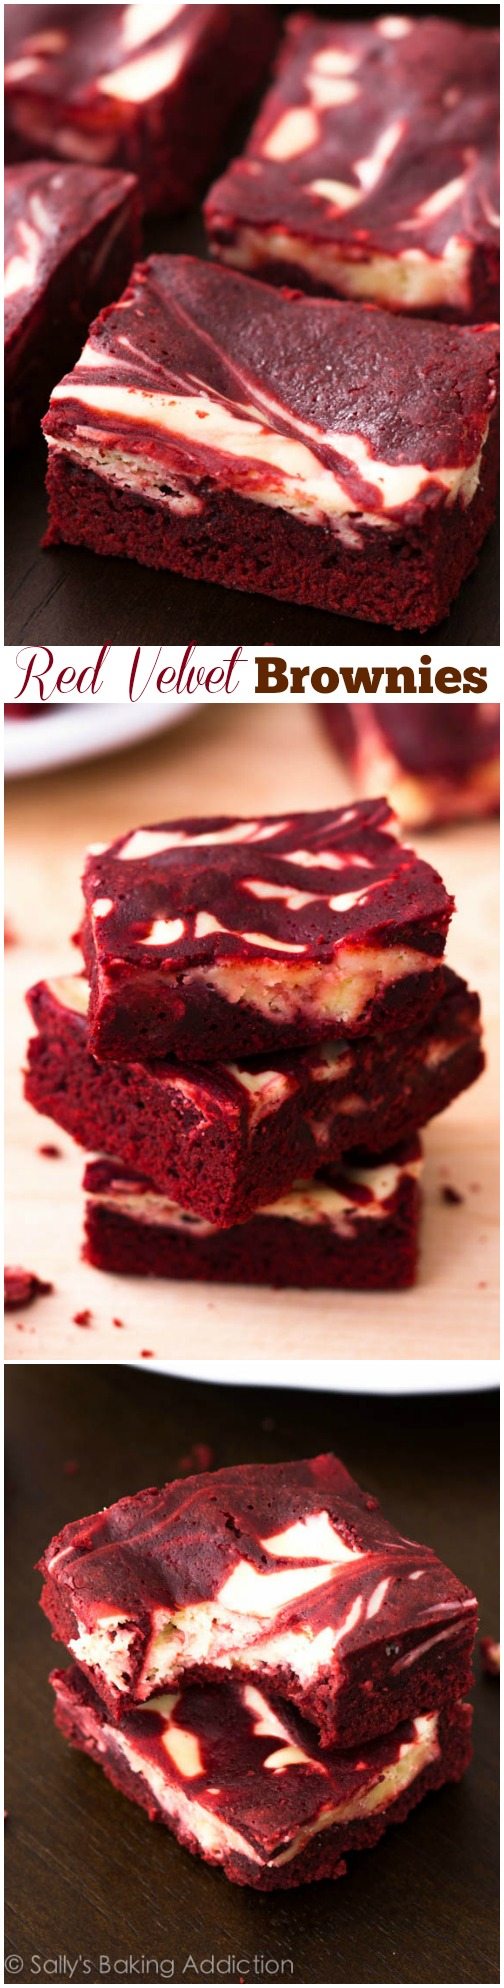 3 images of red velvet cheesecake swirl brownies